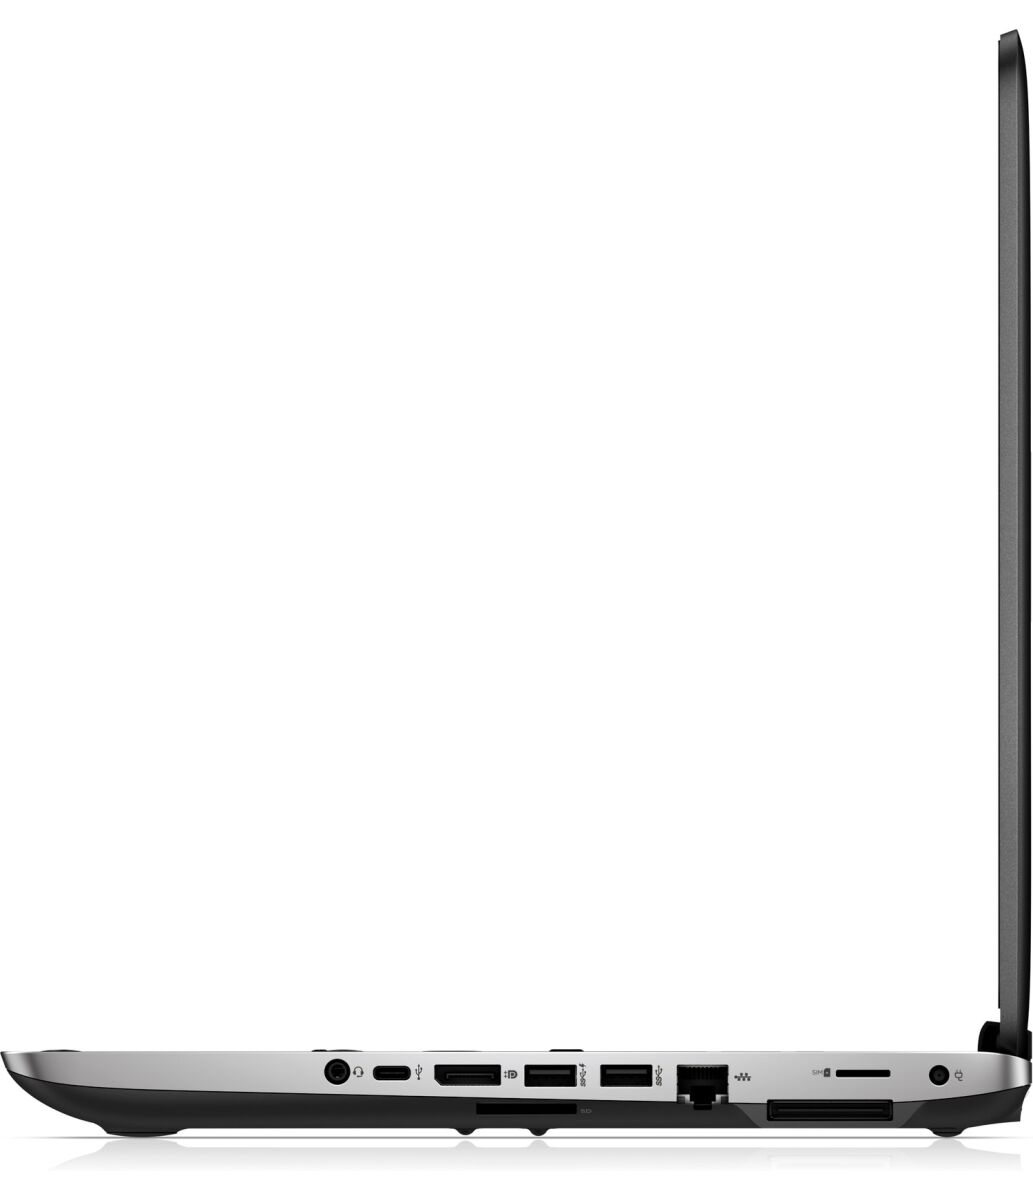 Hp Probook 650 G2 6xe57es Laptop Specifications 7395